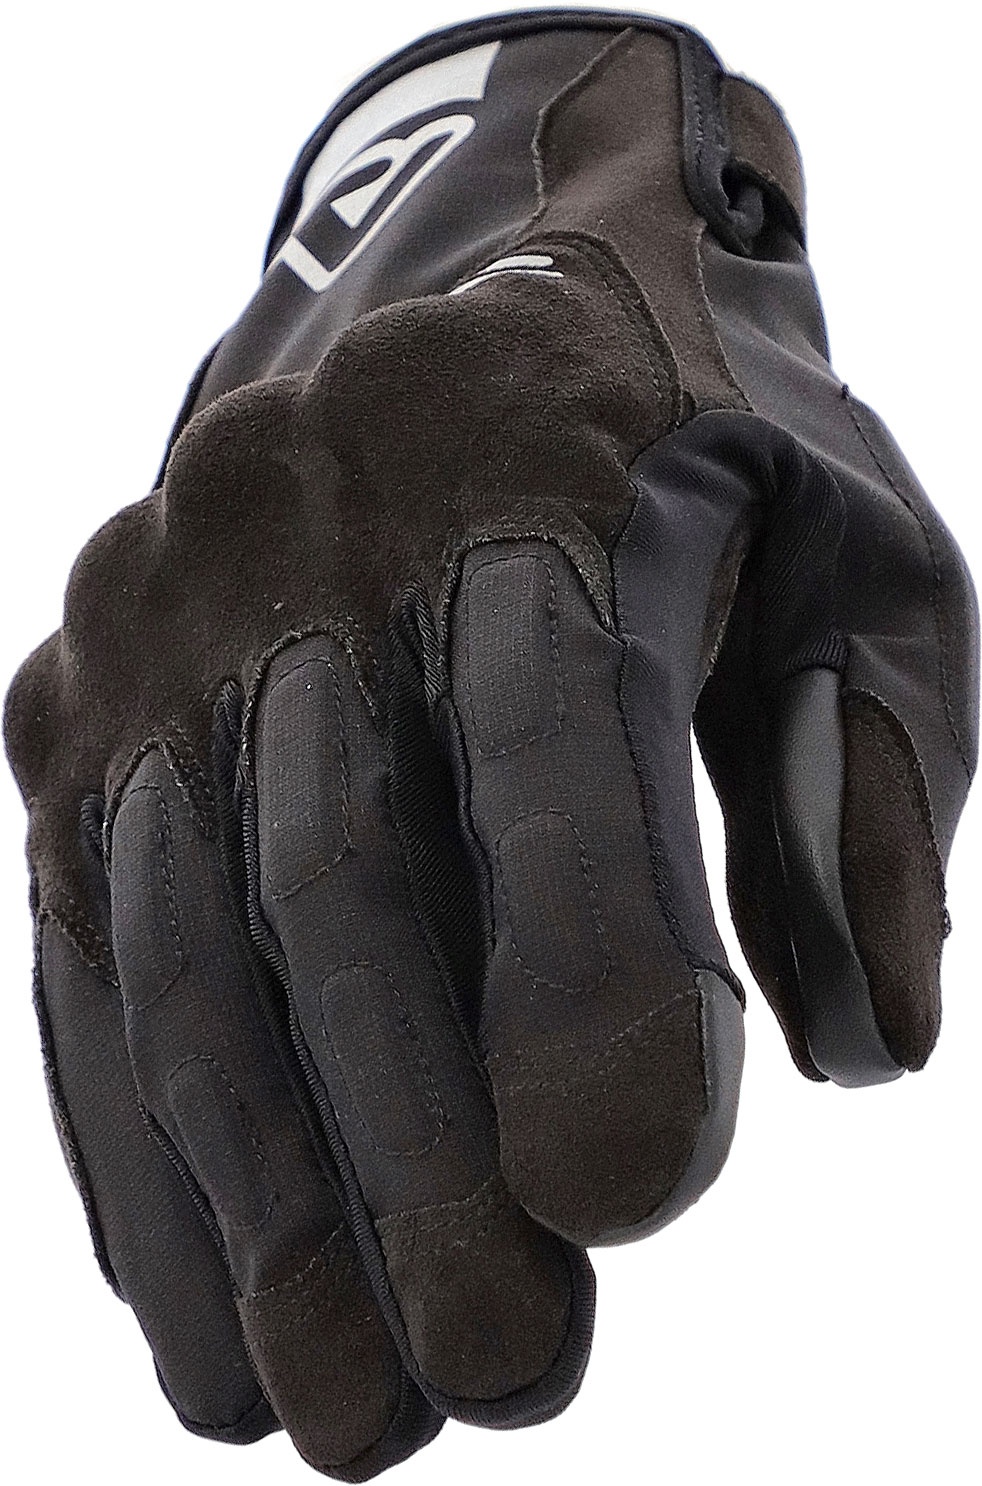 Acerbis Scrambler, gants - Noir/Gris - S